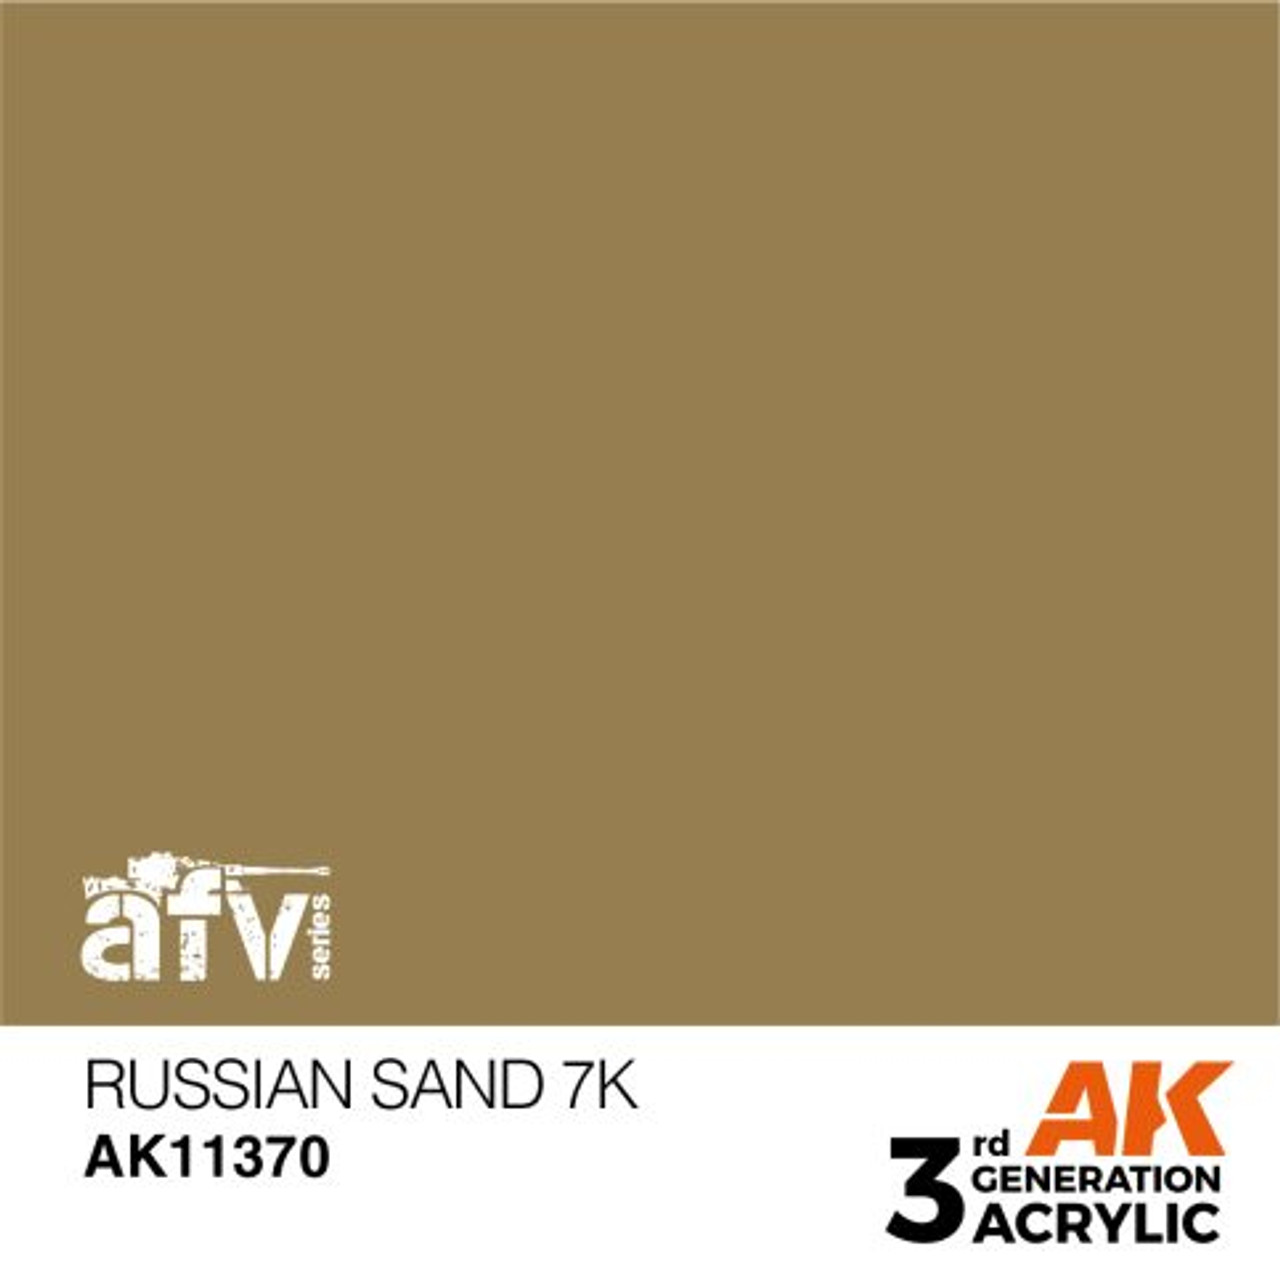 3G AFV 370 - Russian Sand 7K